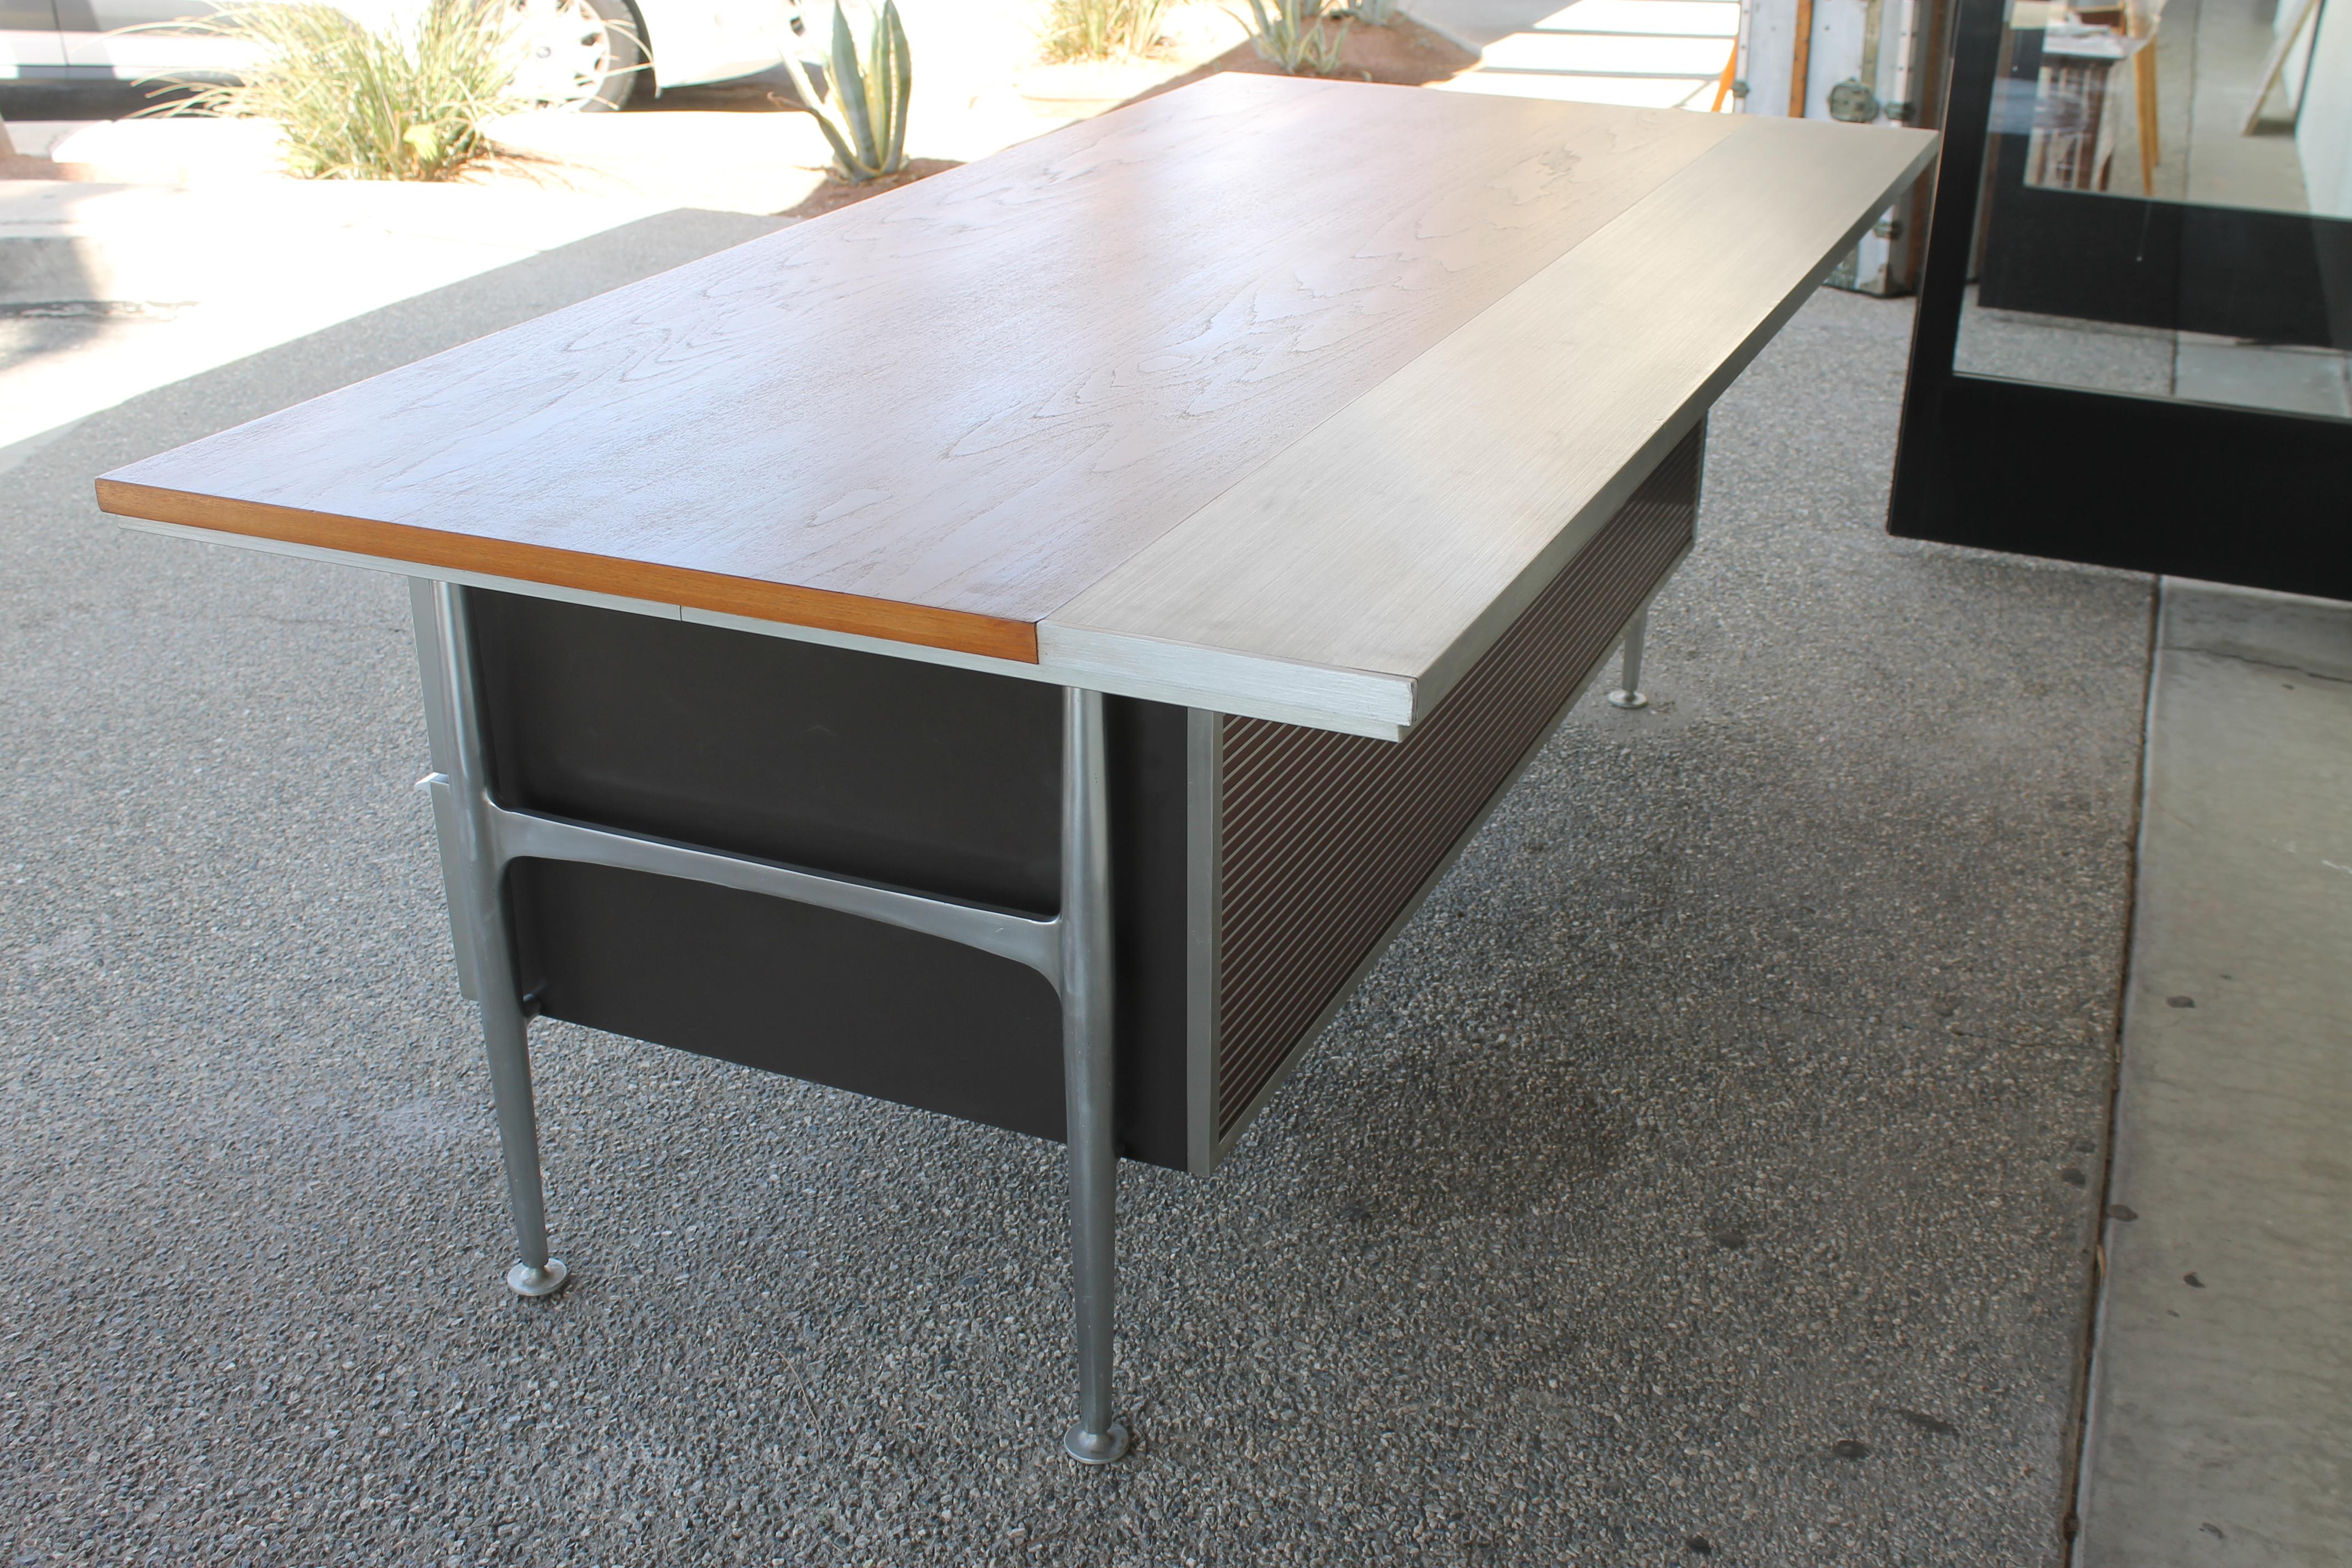 Welton Becket Aluminum and Wood Desk for Kaiser Aluminum 3